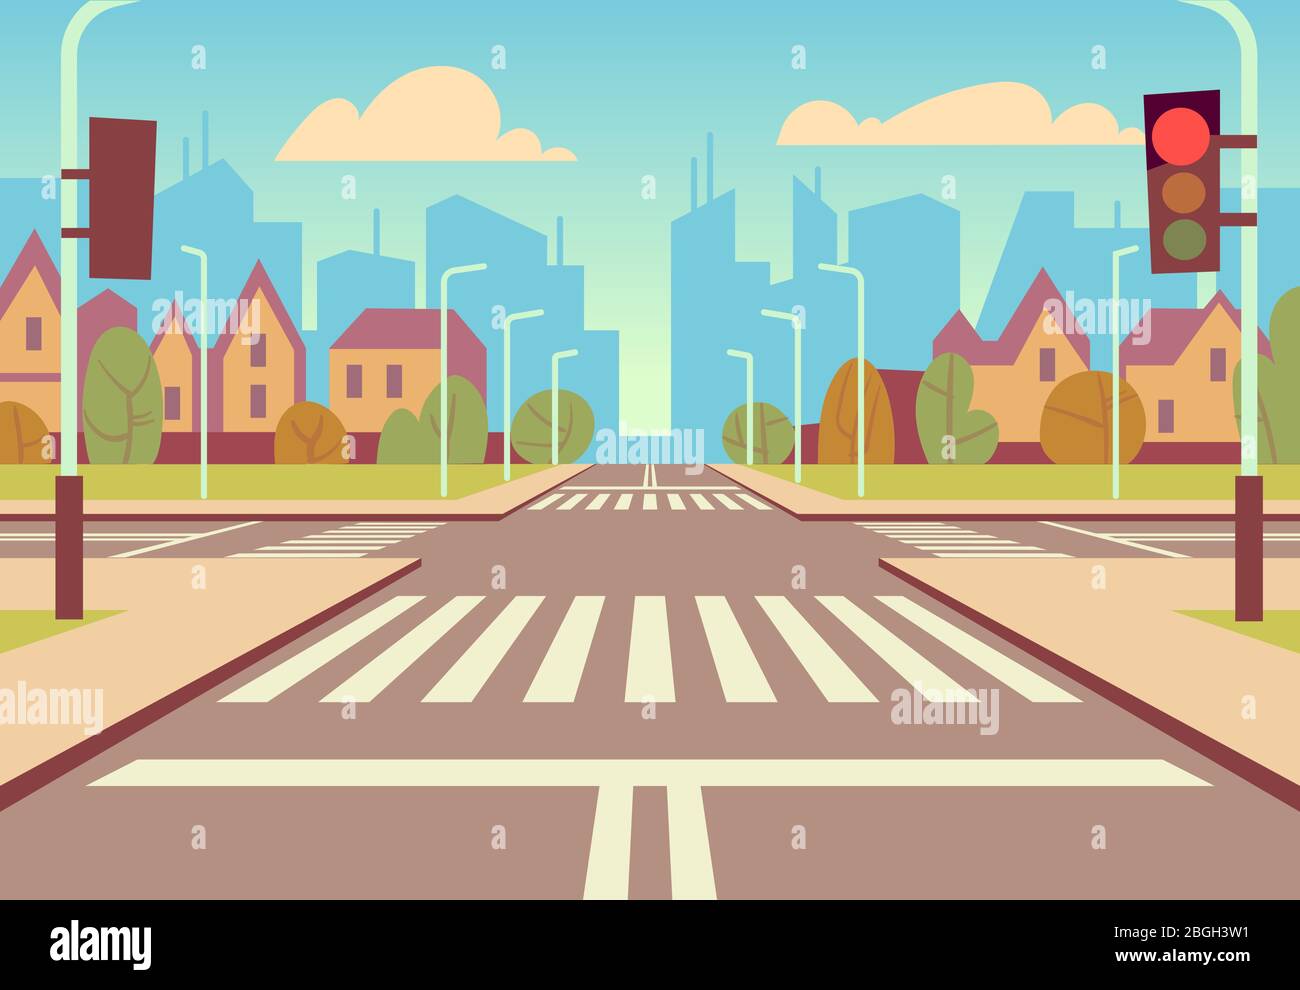 Cartoon city crossroads with traffic lights, sidewalk, crosswalk and urban landscape. Empty roads for car traffic vector illustration. Urban road city with crosswalk and sidewalk Stock Vector